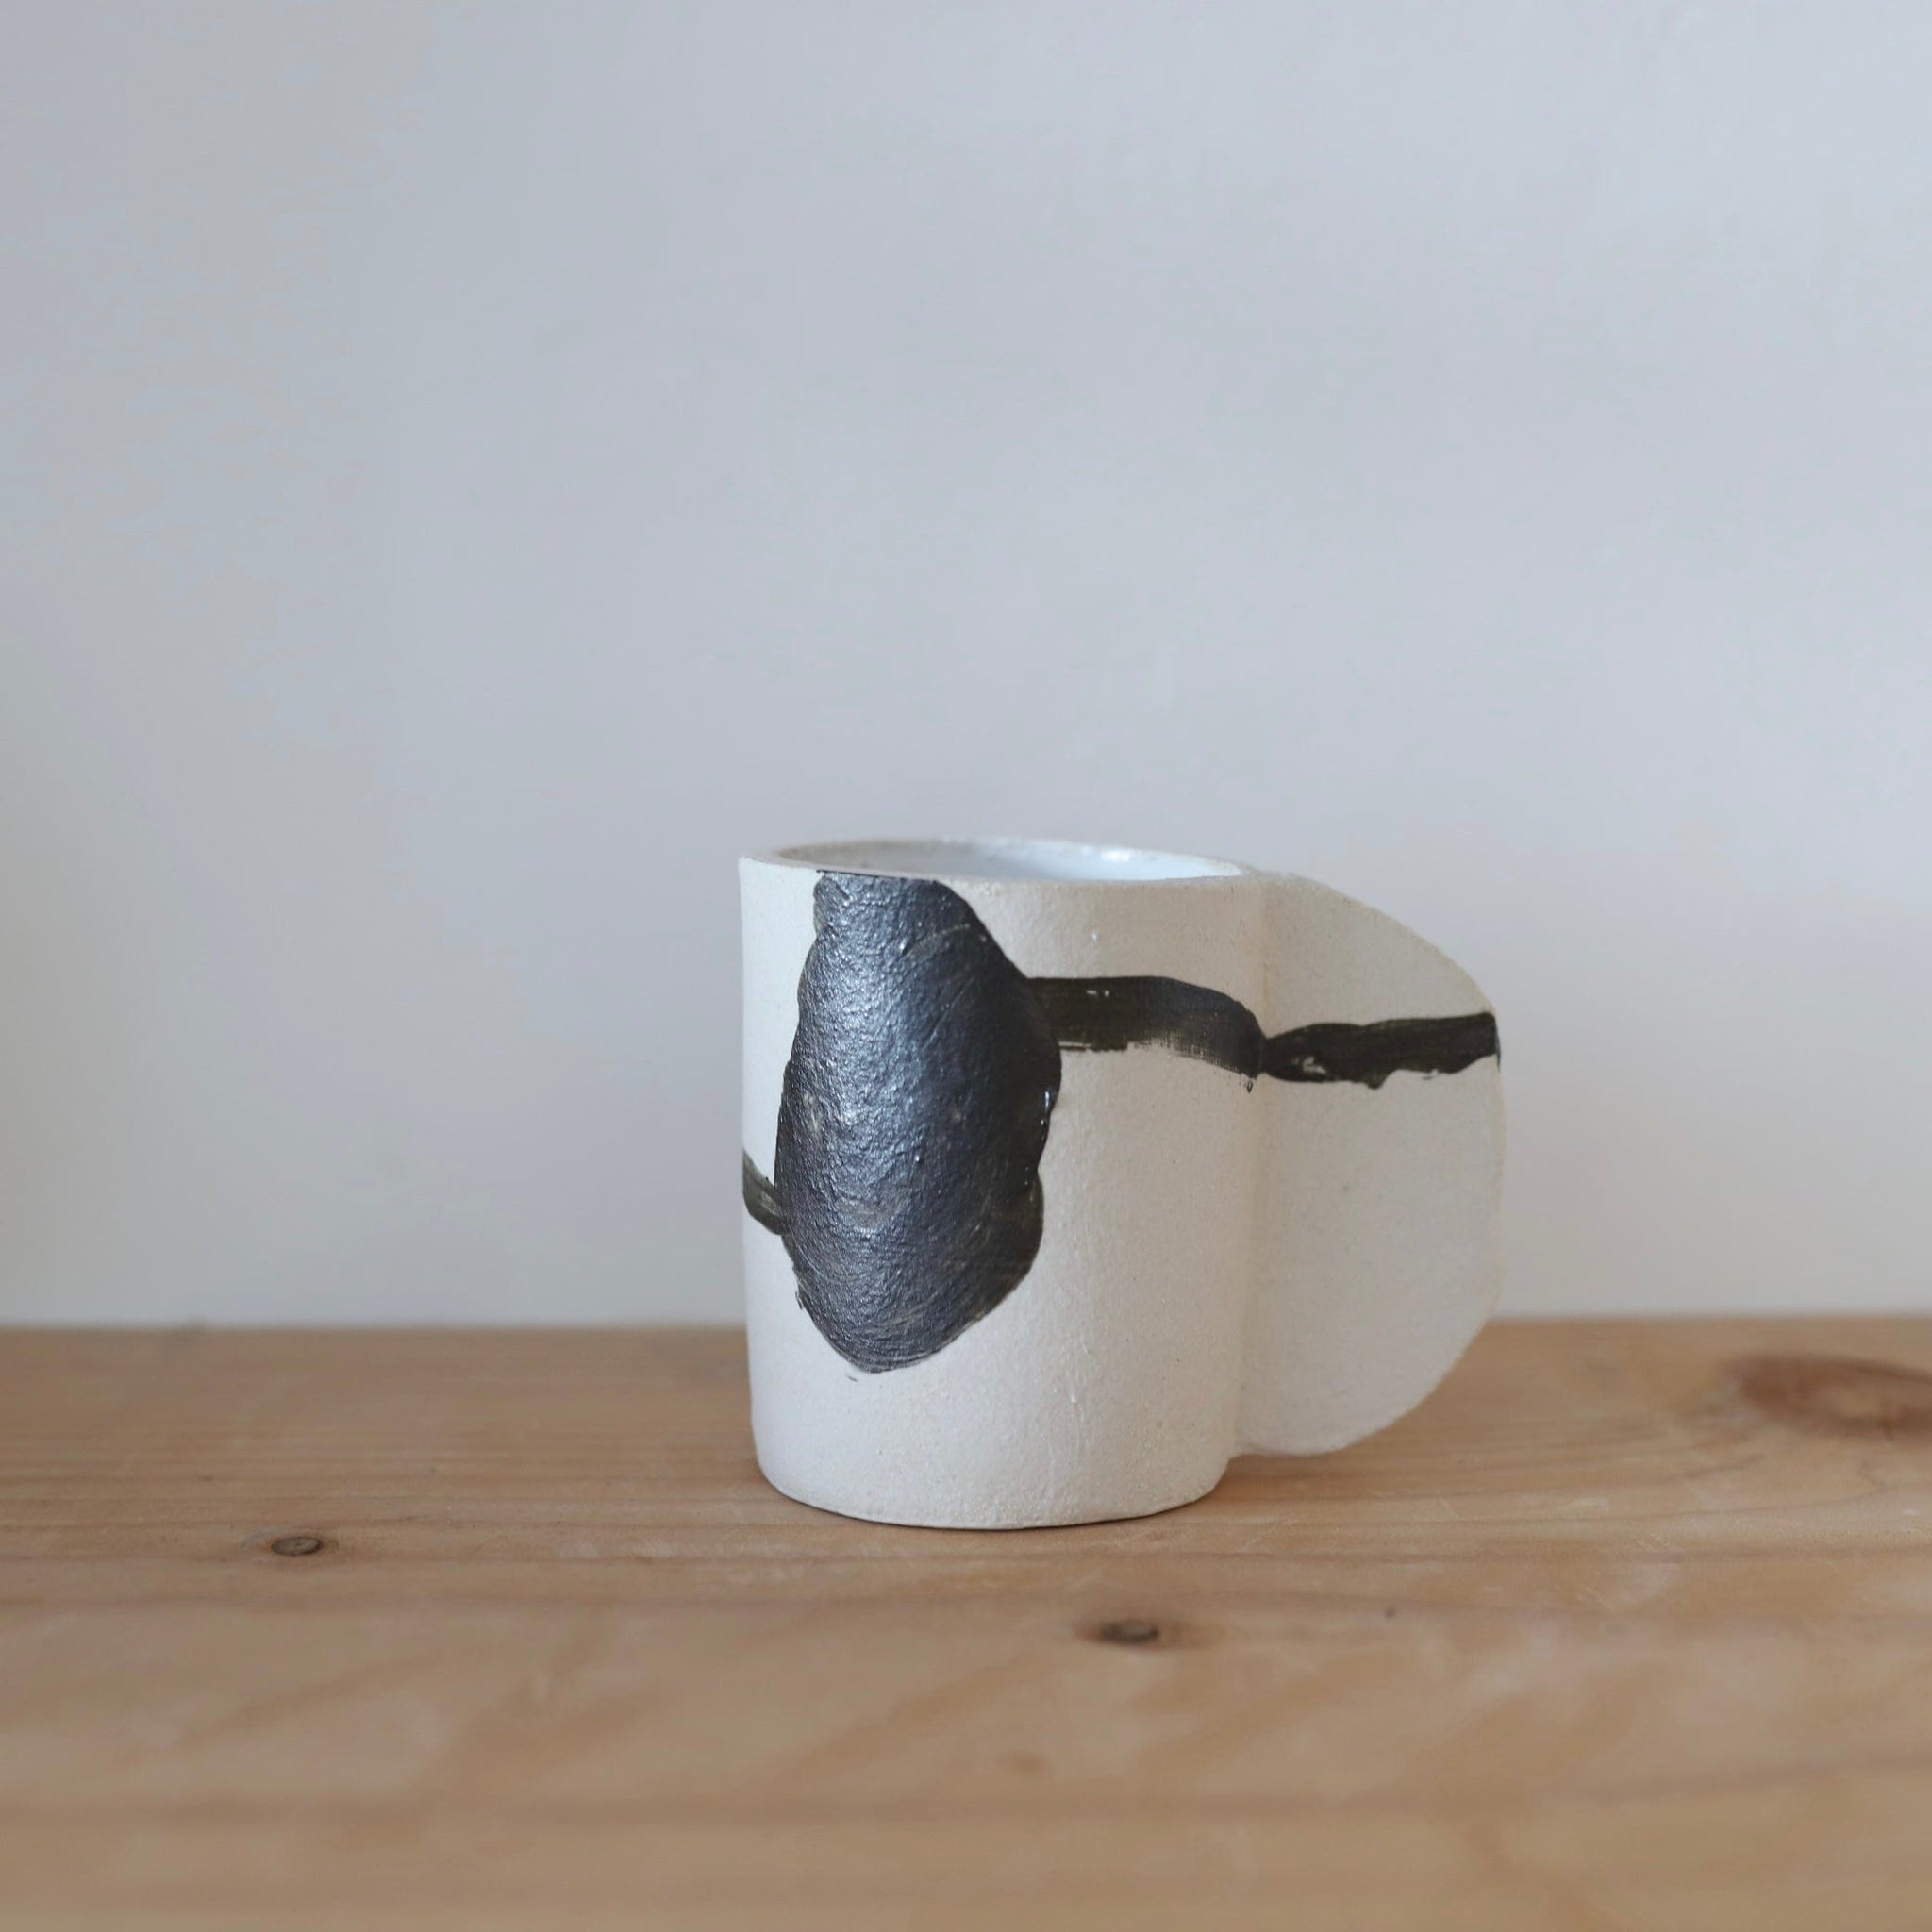 Heyja Do Kitchen A. Hand Sculpted Patterned Ceramic Mugs | Heyja Do